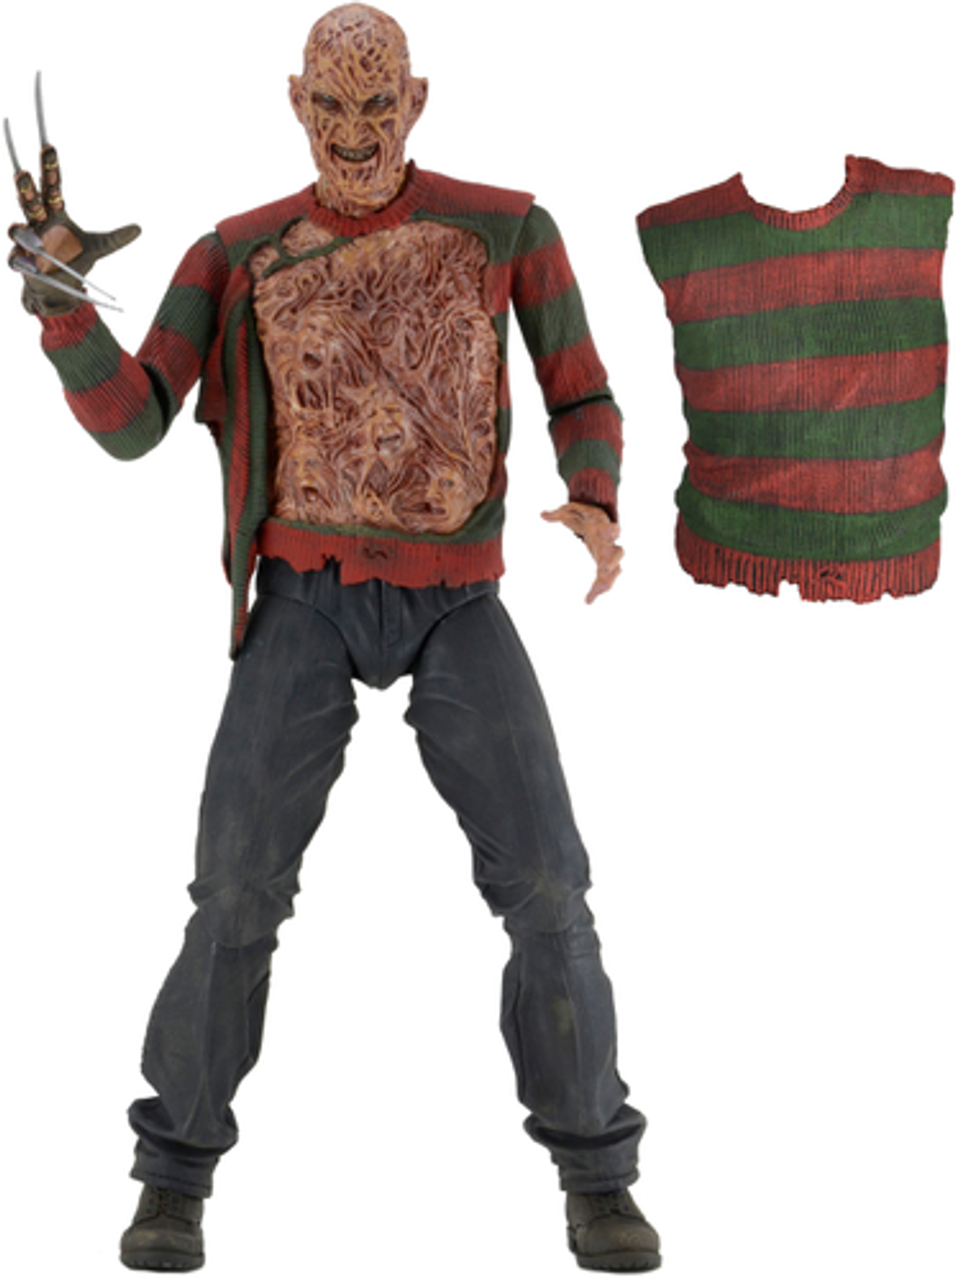 NECA - Nightmare on Elm Street ¼ Scale Figure - Dream Warrior Freddy